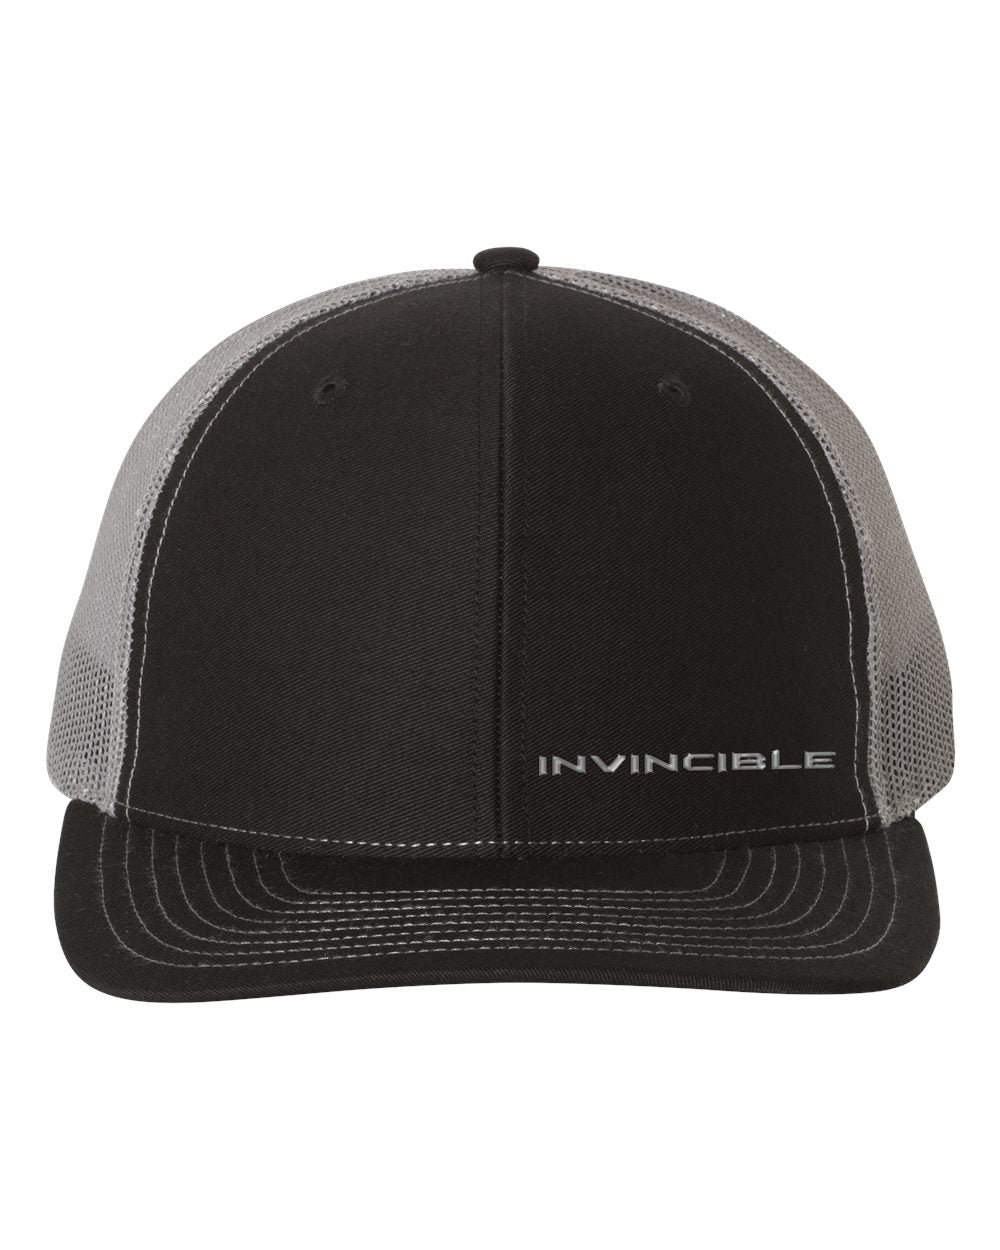 Invincible Black/Charcoal Puff Text Trucker Hat